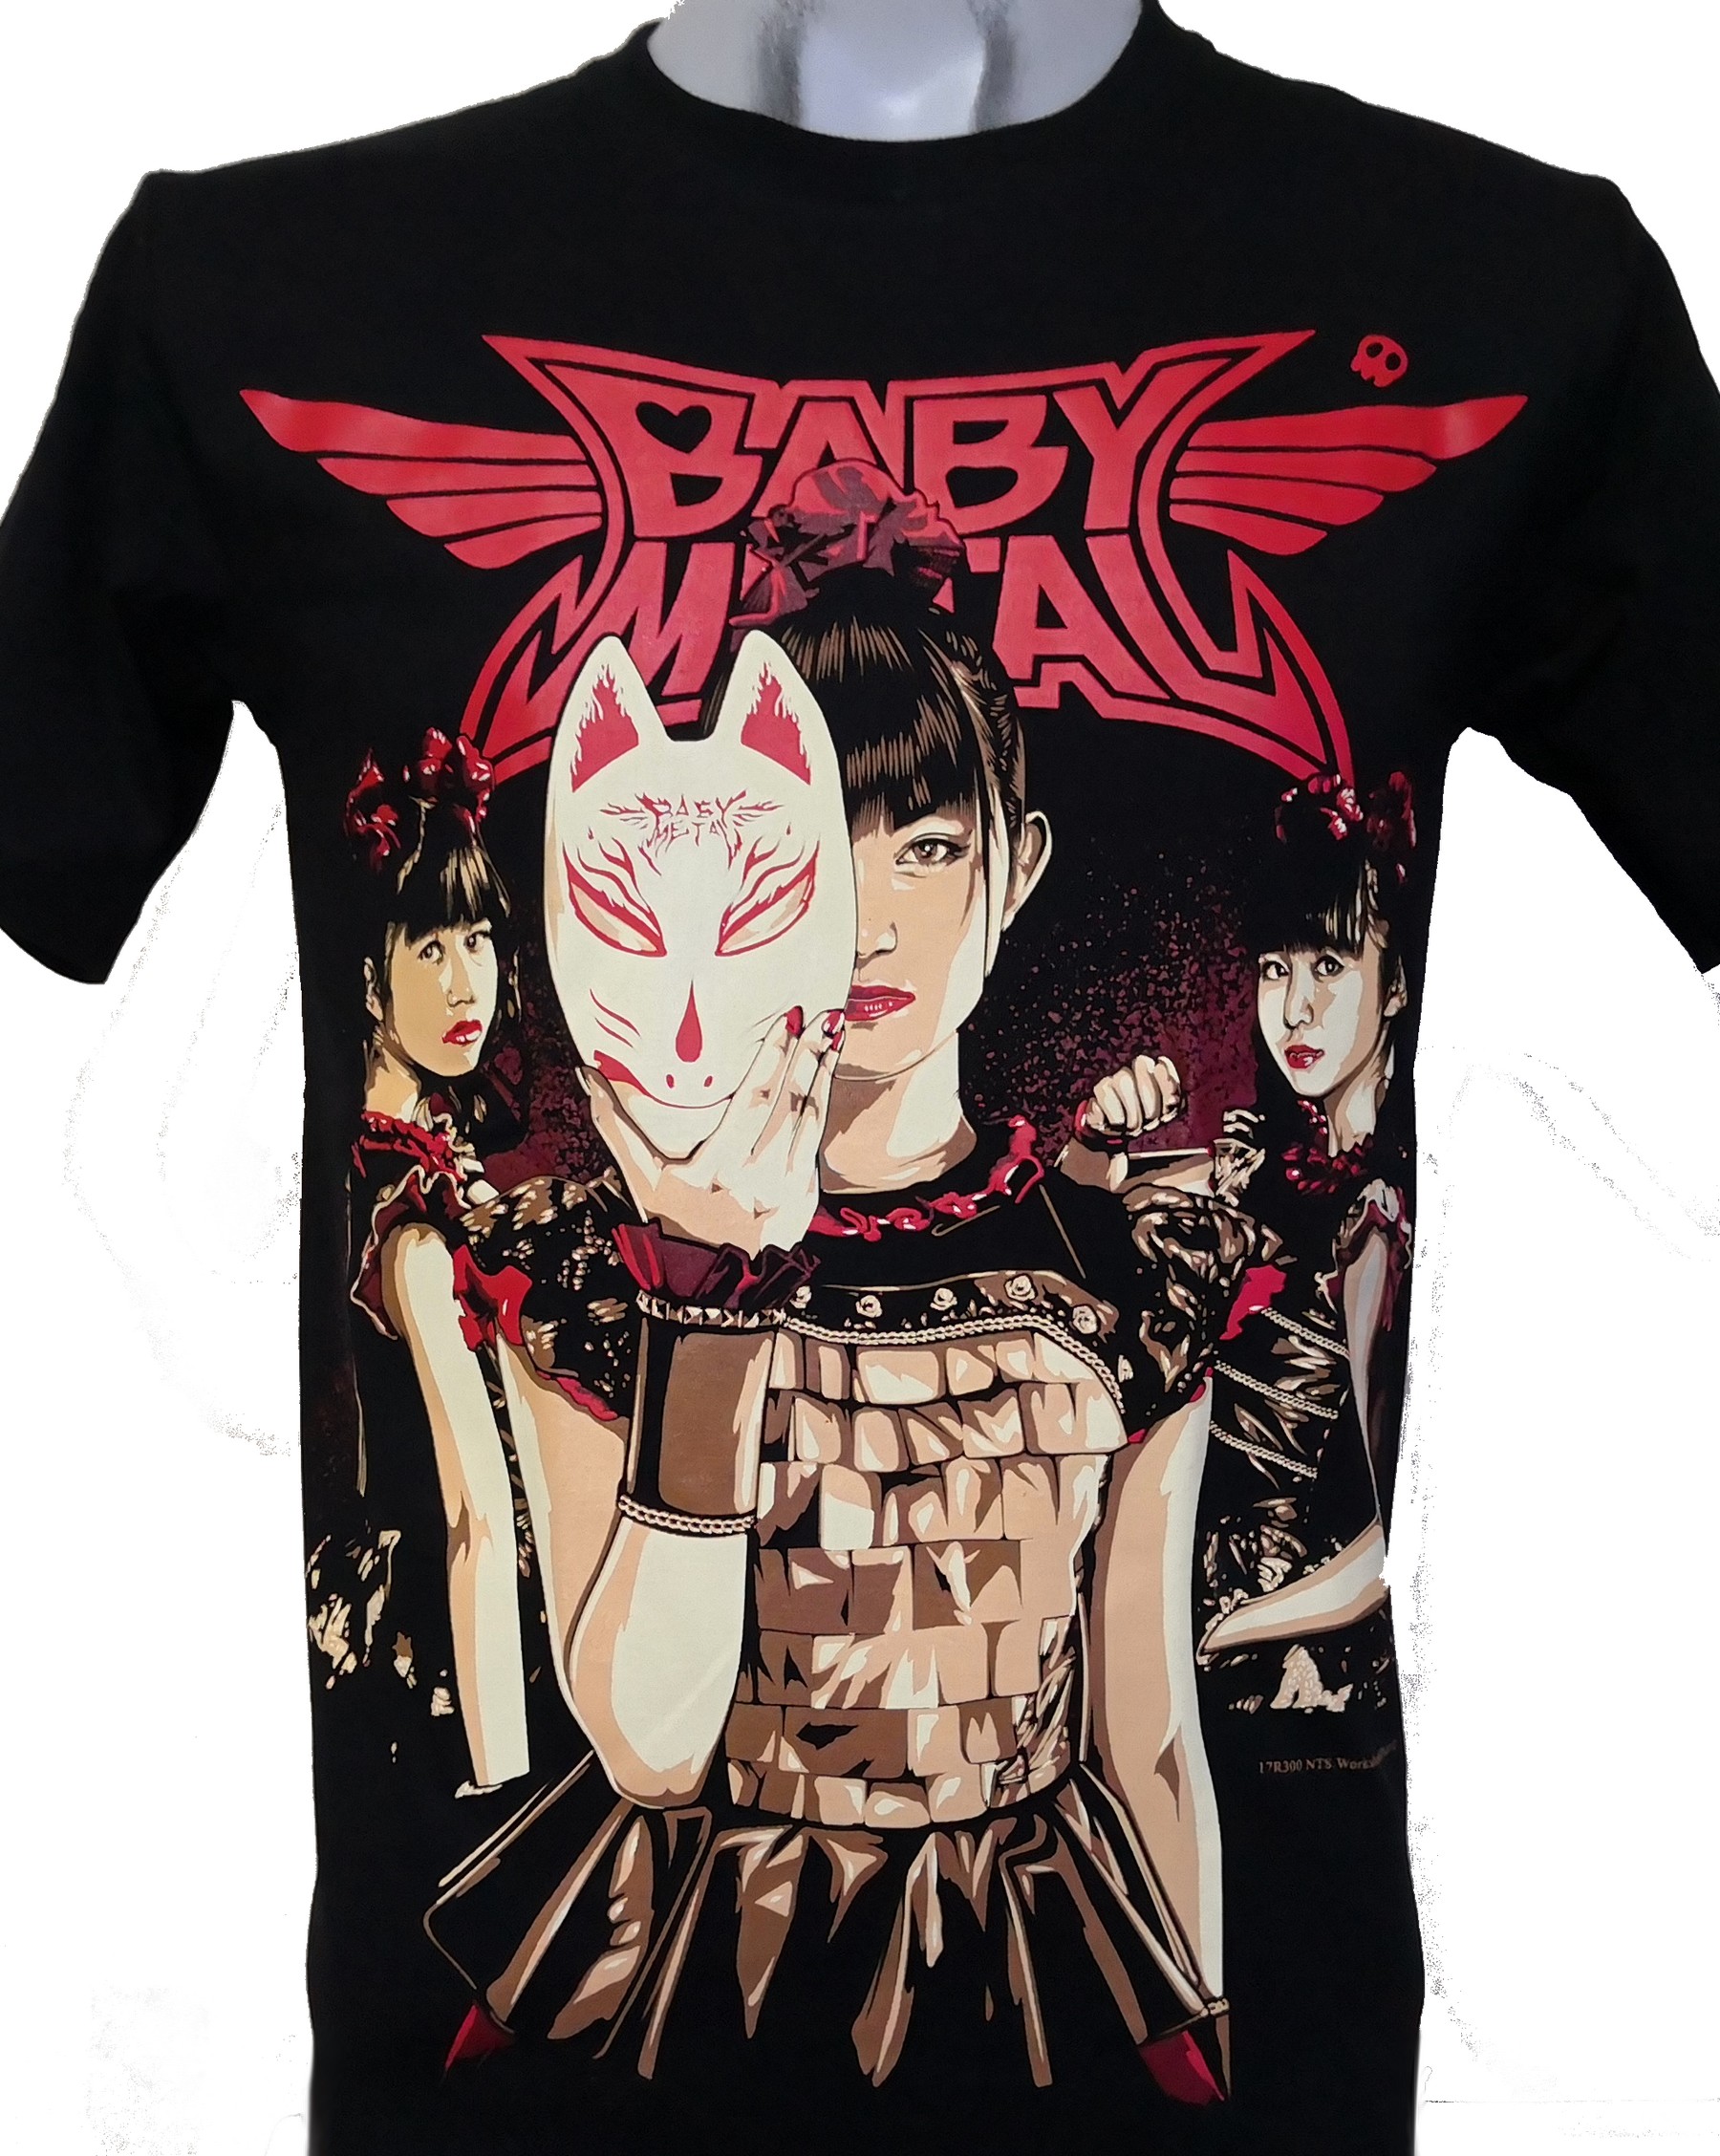 Buy > babymetal tee shirt > in stock